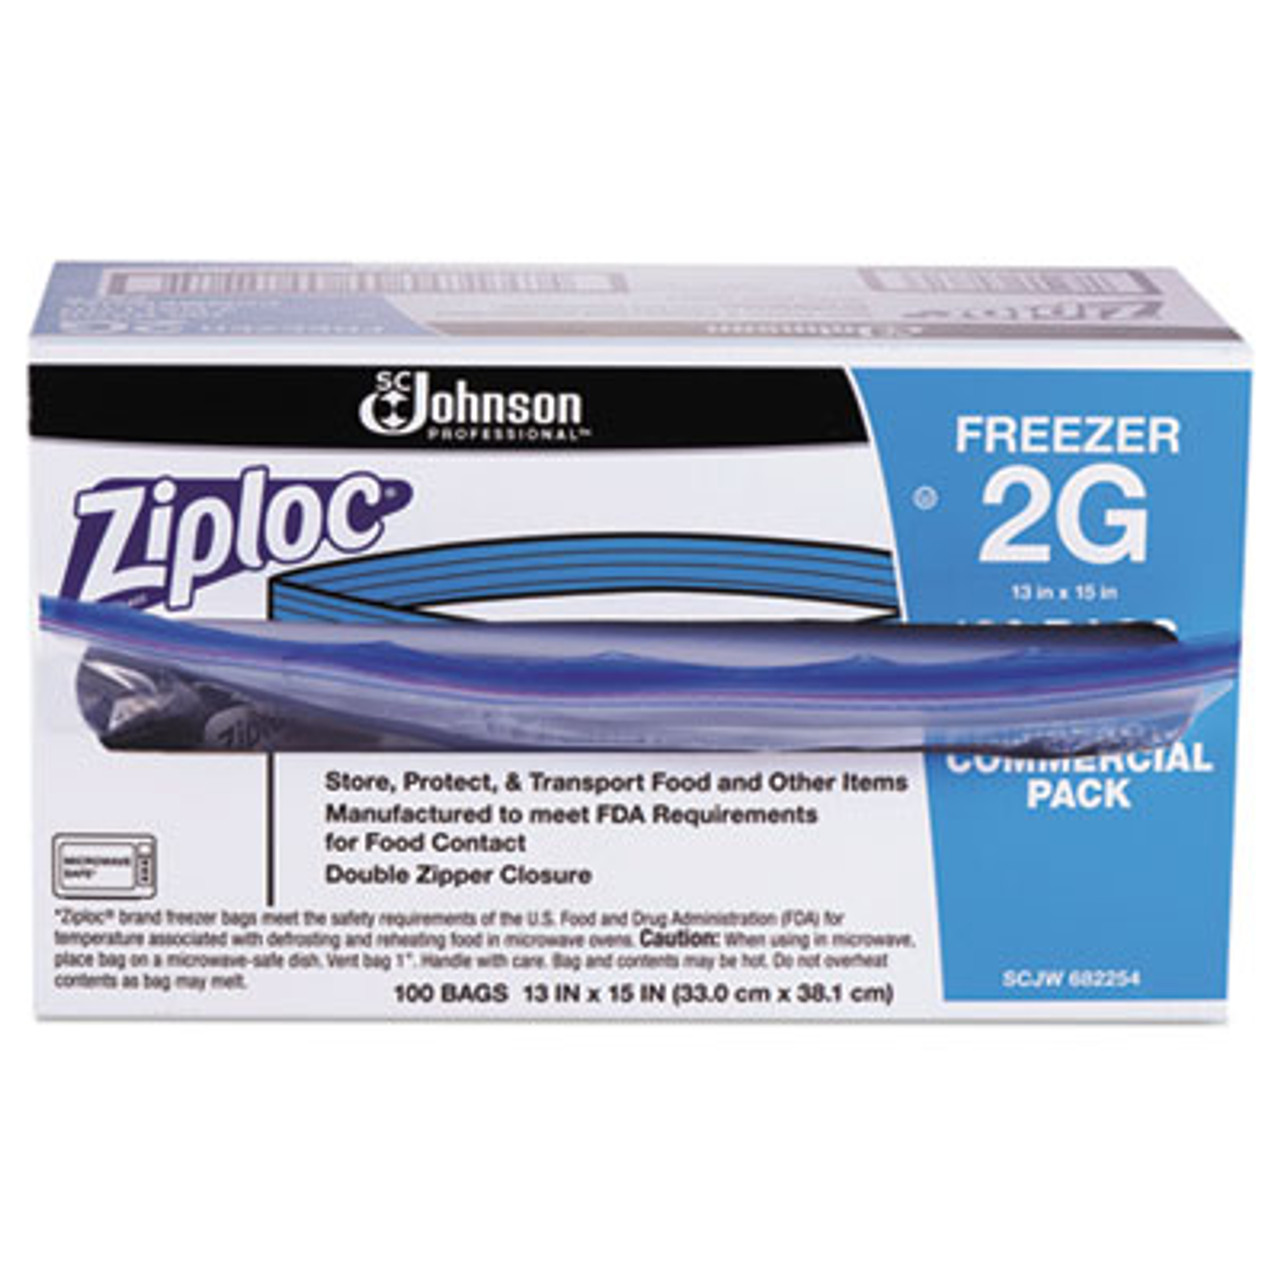 SC Johnson Professional Ziploc Brand Storage Bags, Gallon Size, 10